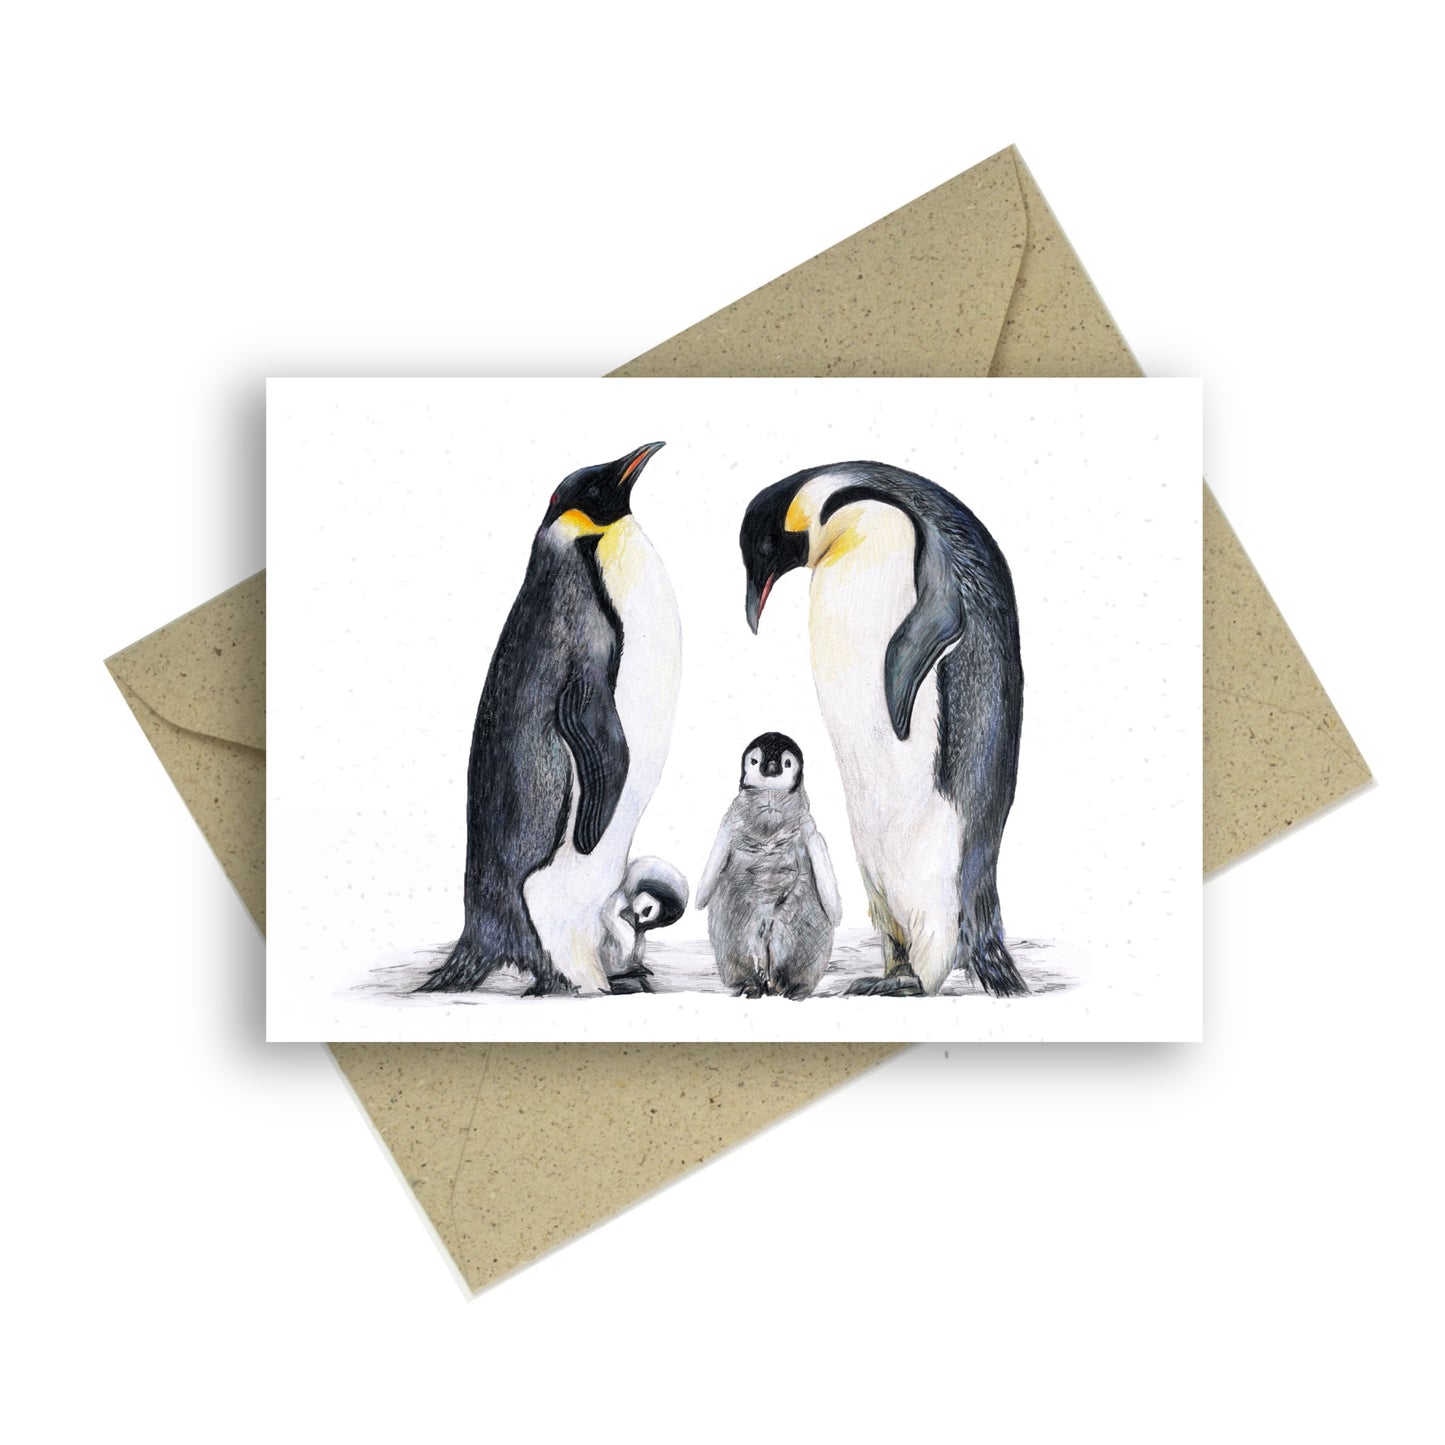 Greeting card “Penguins”